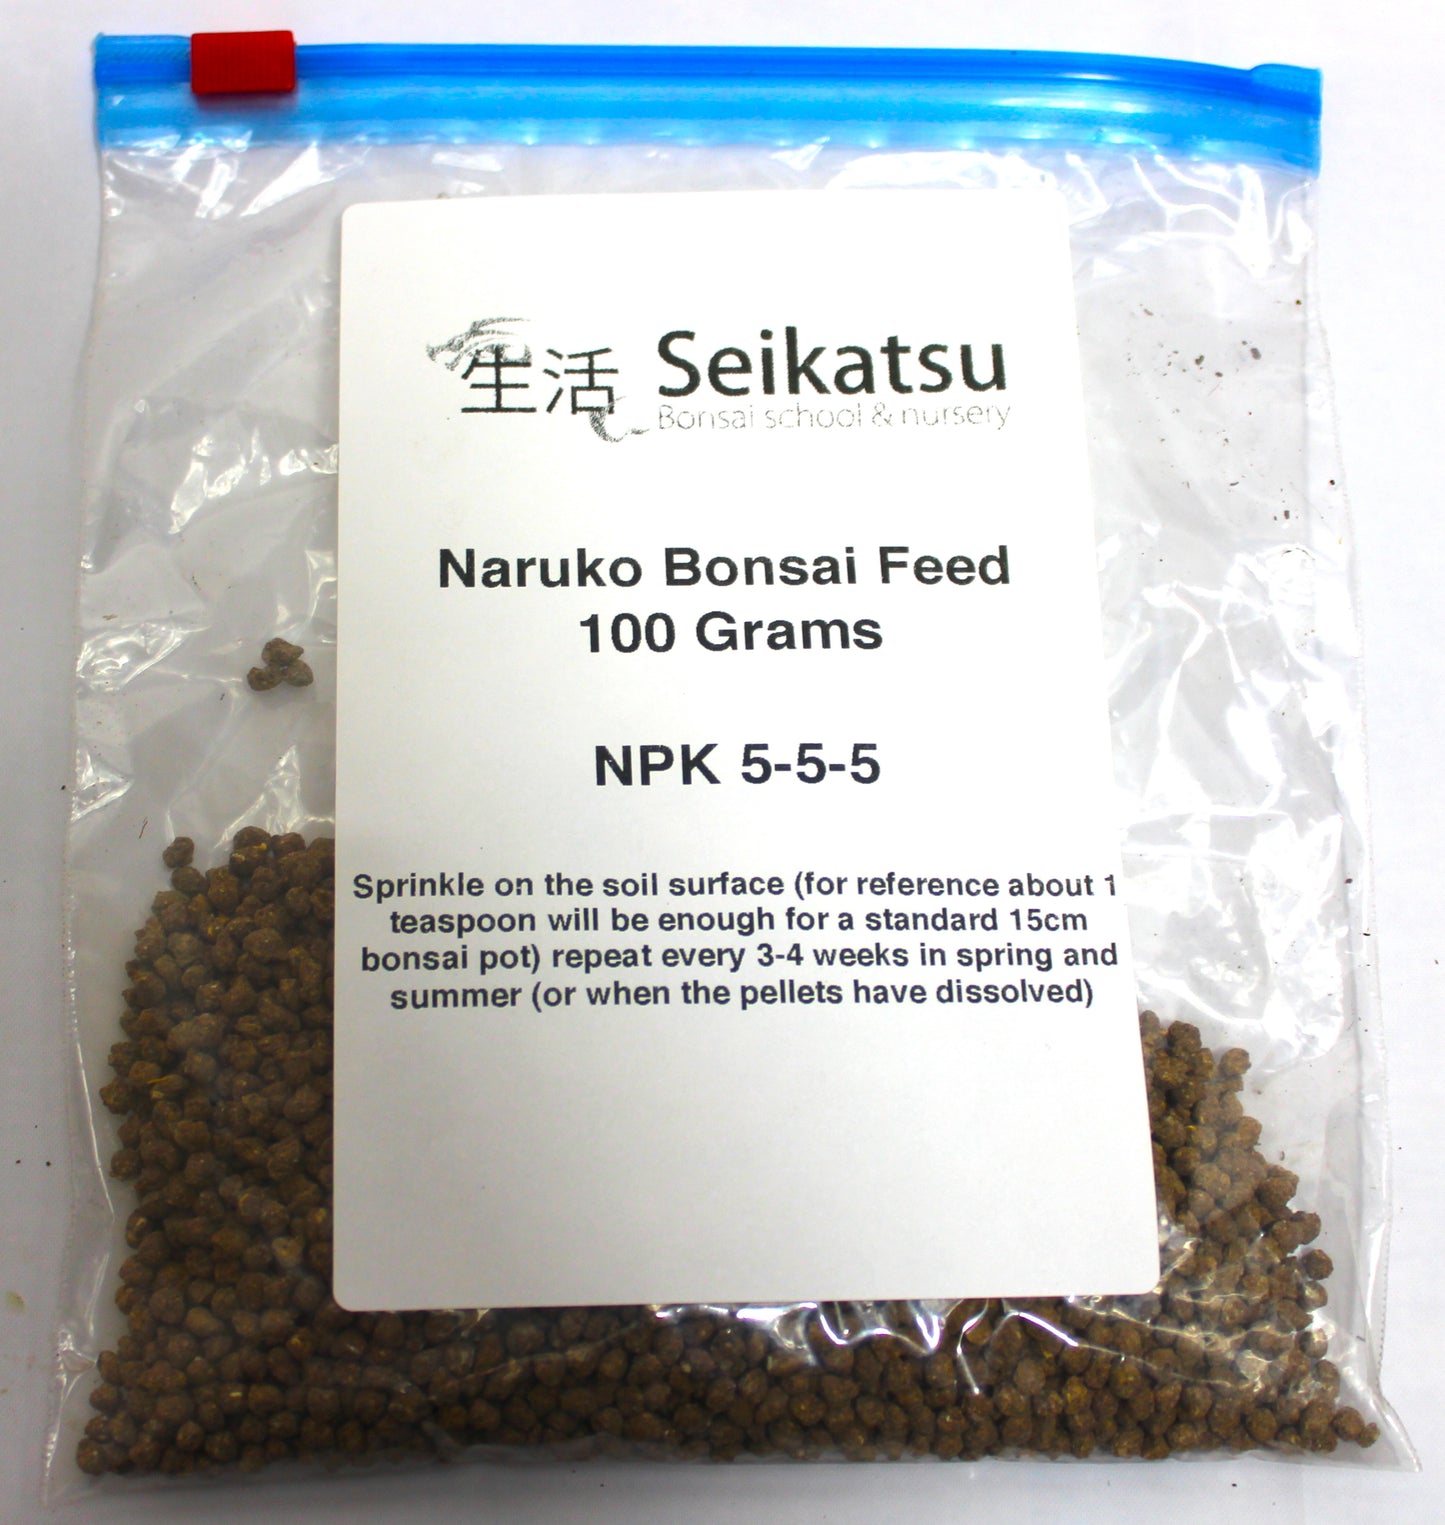 Naruko Bonsai Feed - choose the amount to suit you